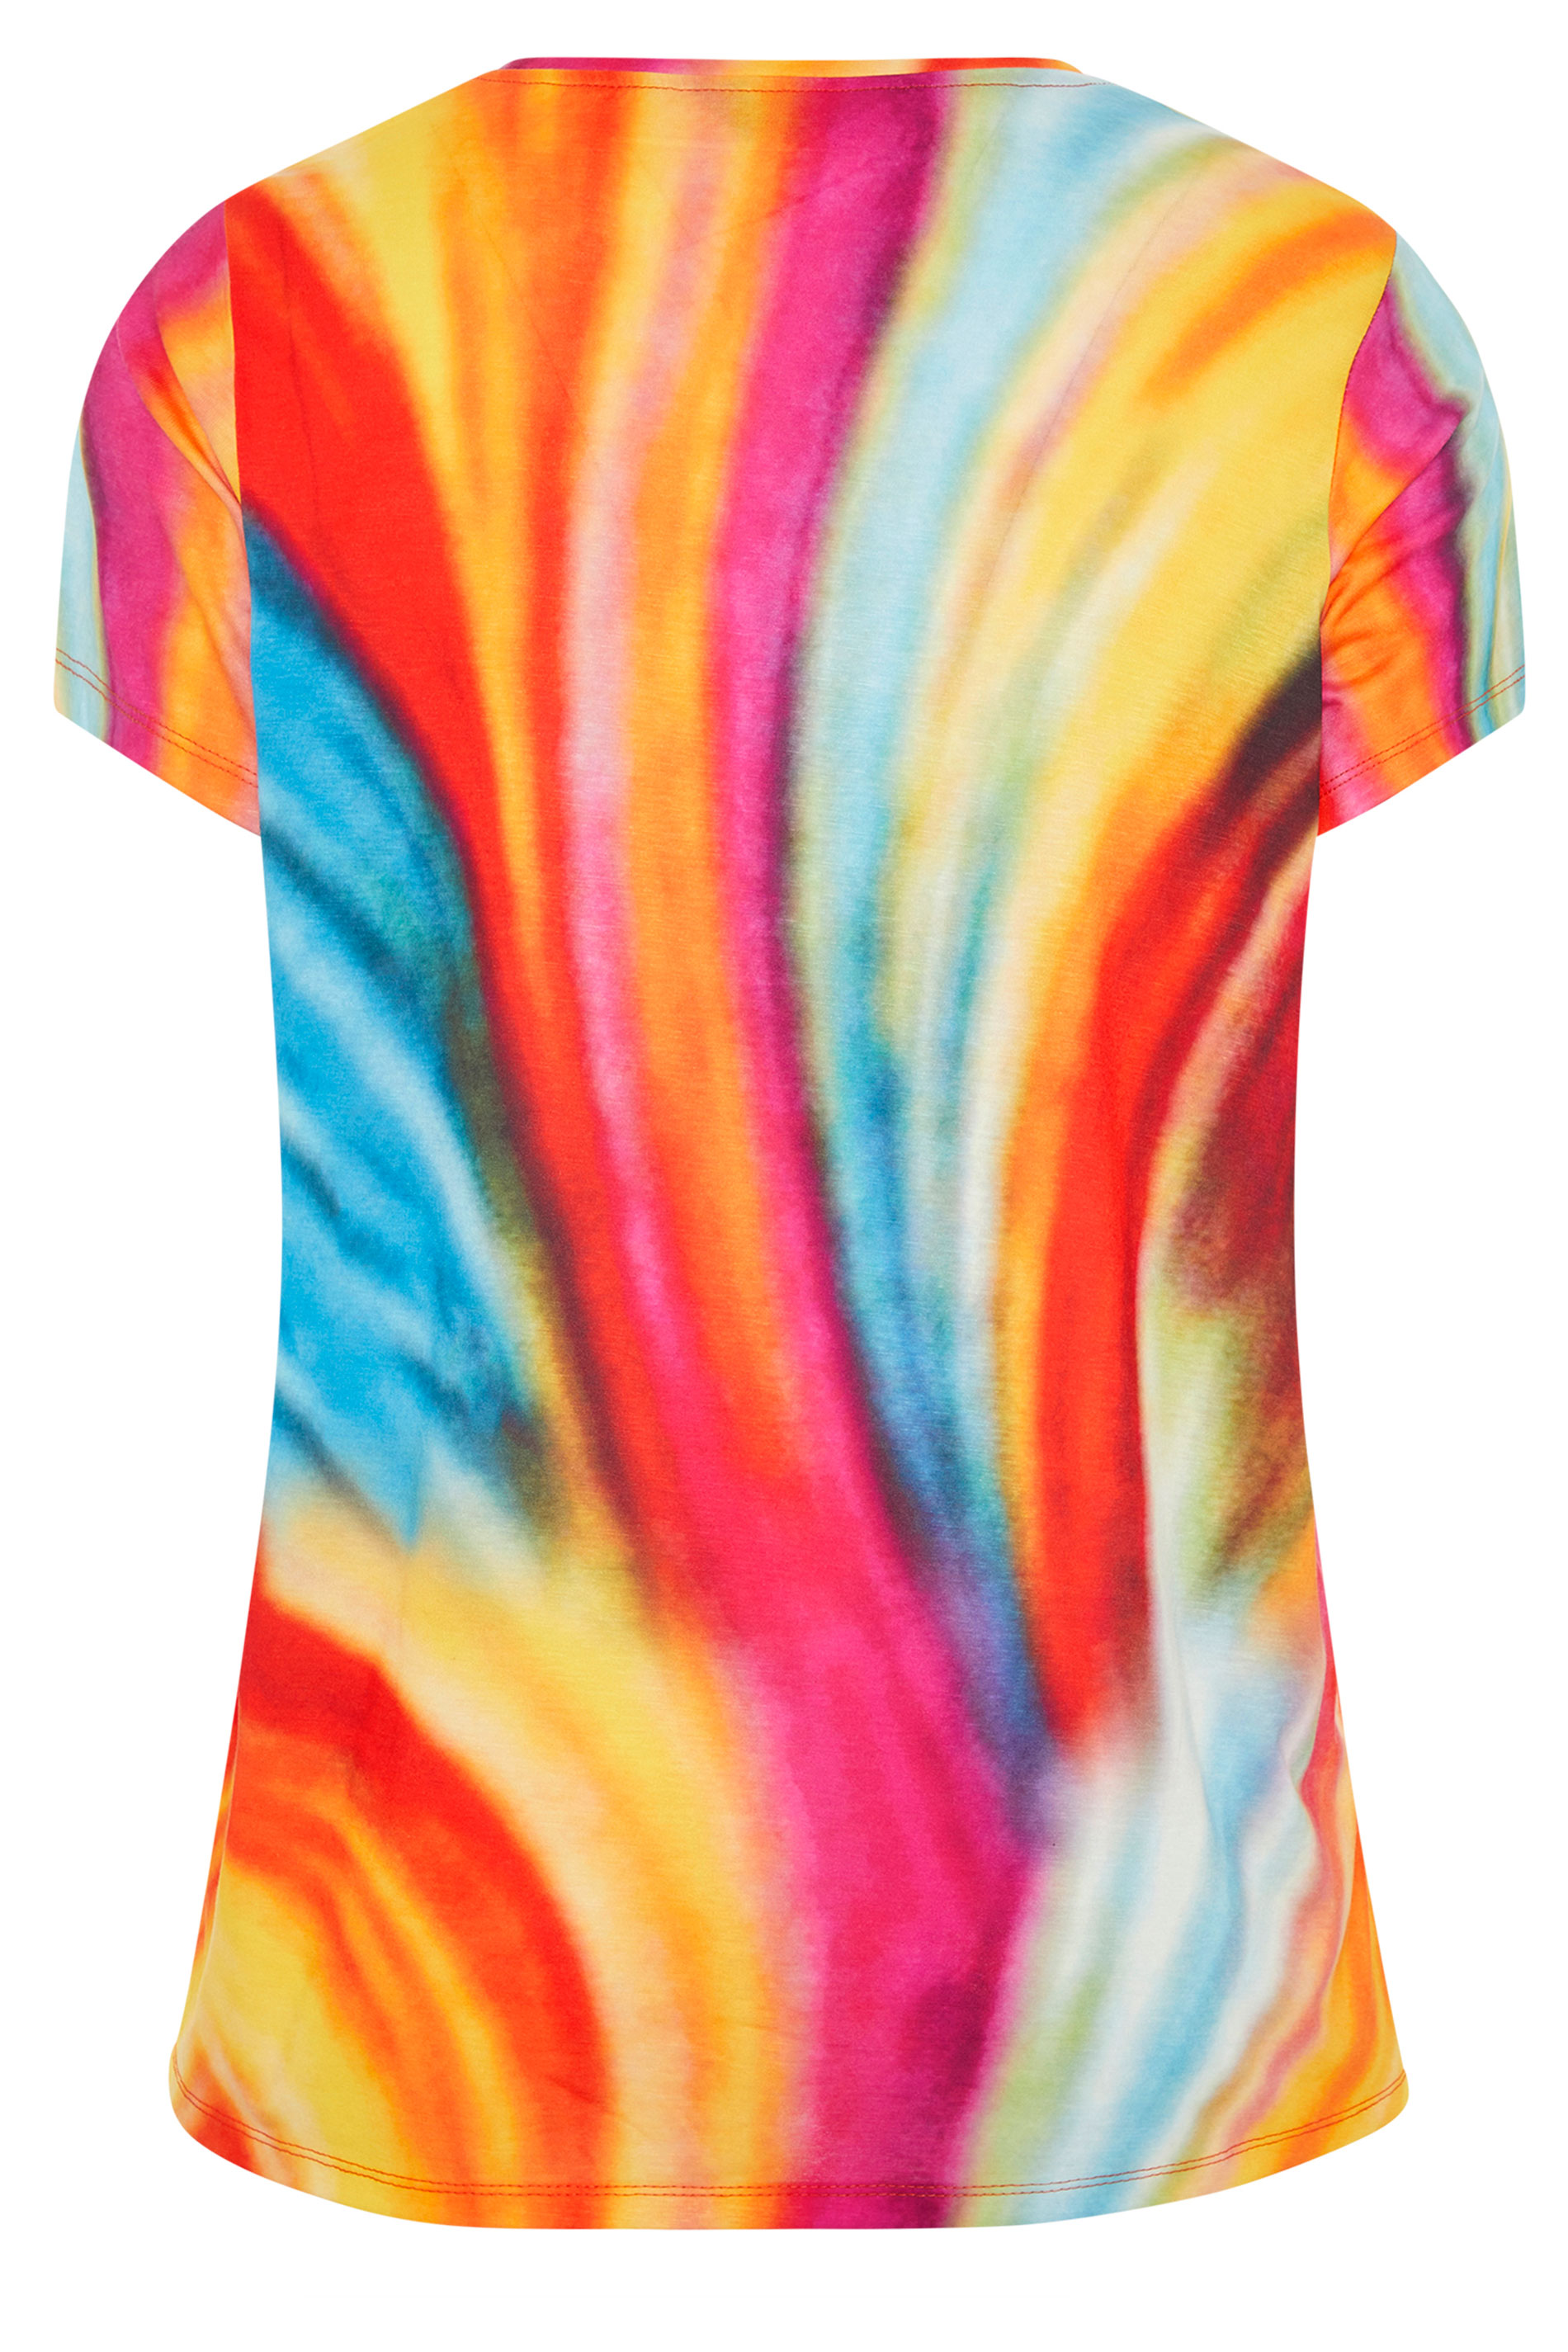 Grande taille  Tops Grande taille  T-Shirts | Top Manches Courtes Imprimé Tie & Dye - ZL42169